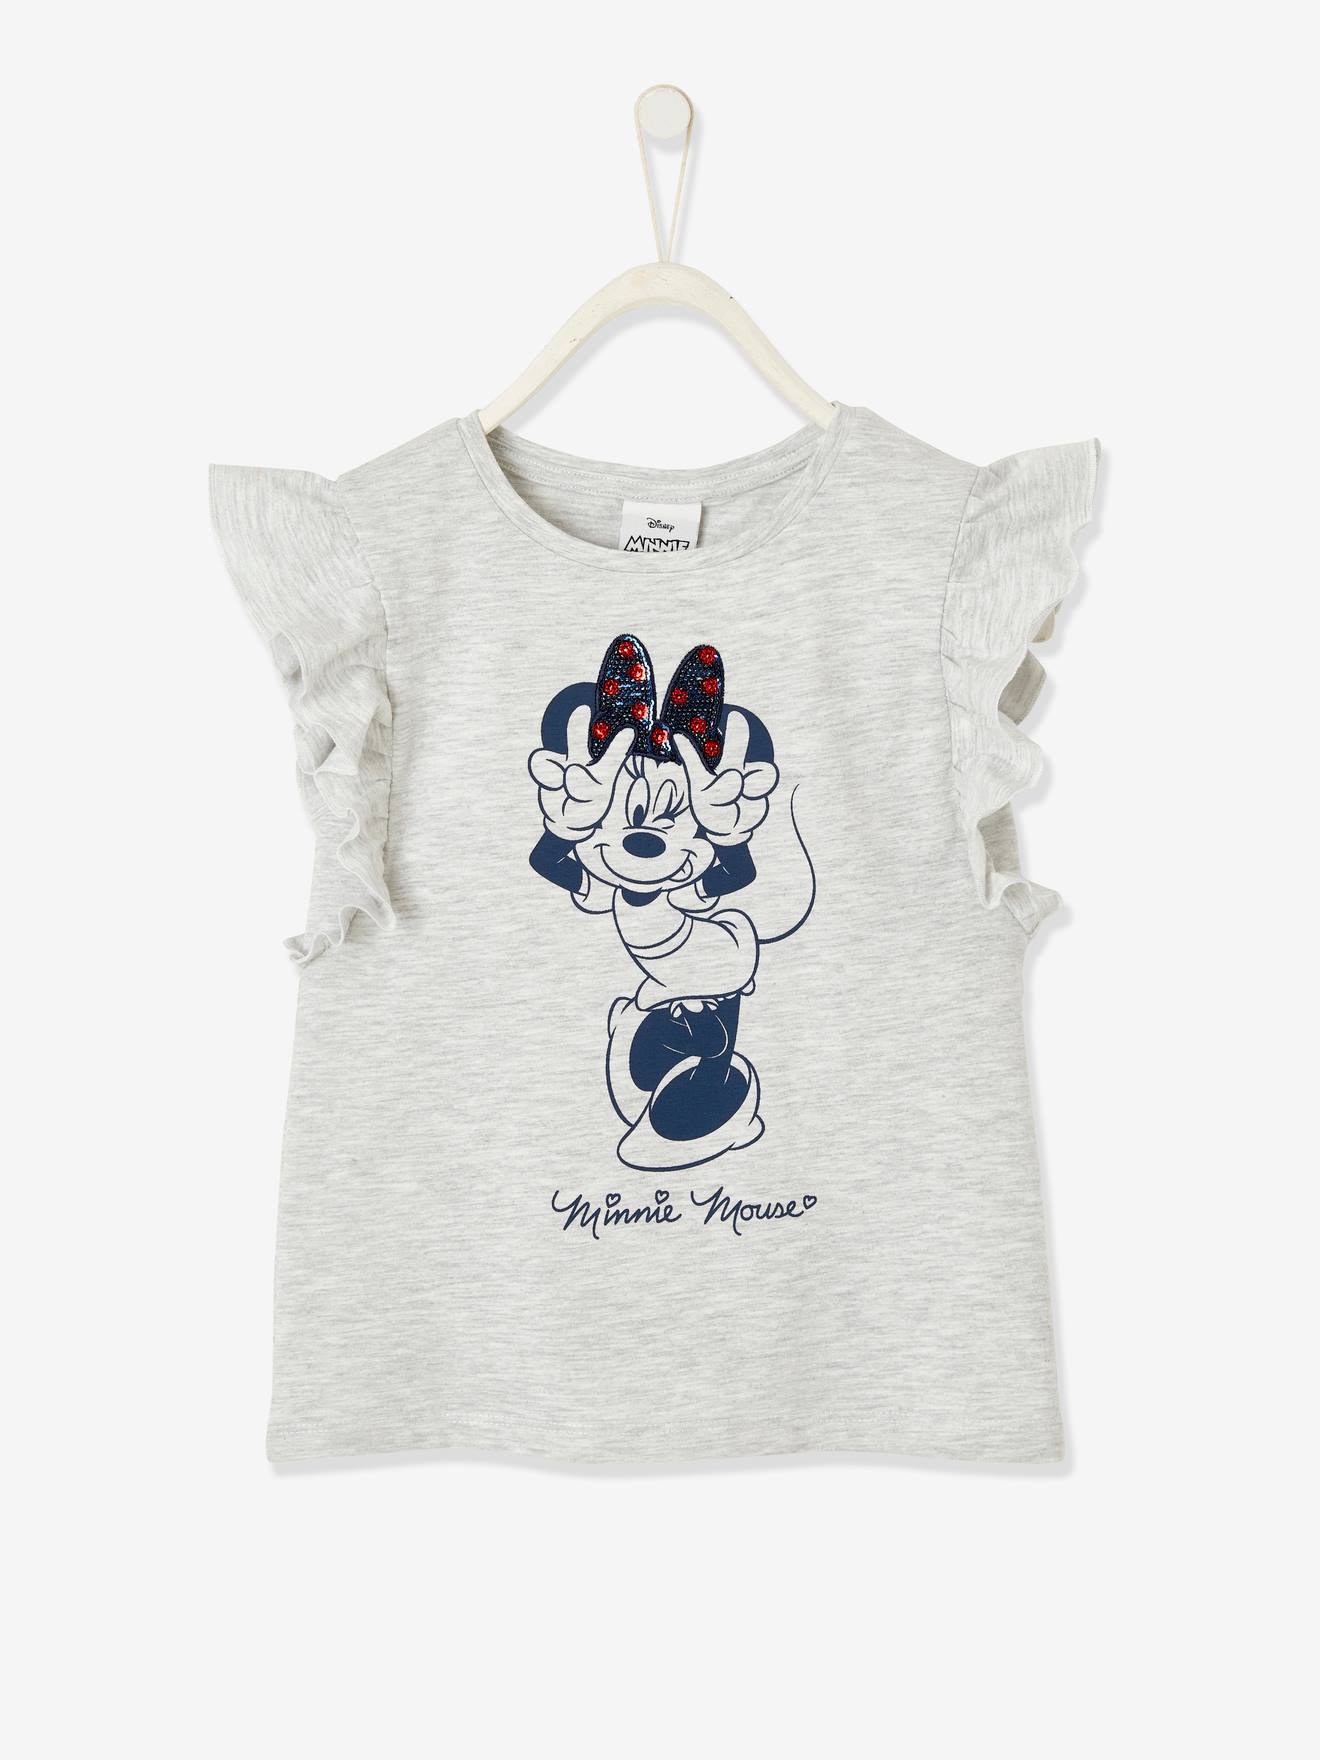 Disney Minnie Mouse T-Shirt Shirt Top festlich Baumwolle weiß Gr.80 86 92 NEU 